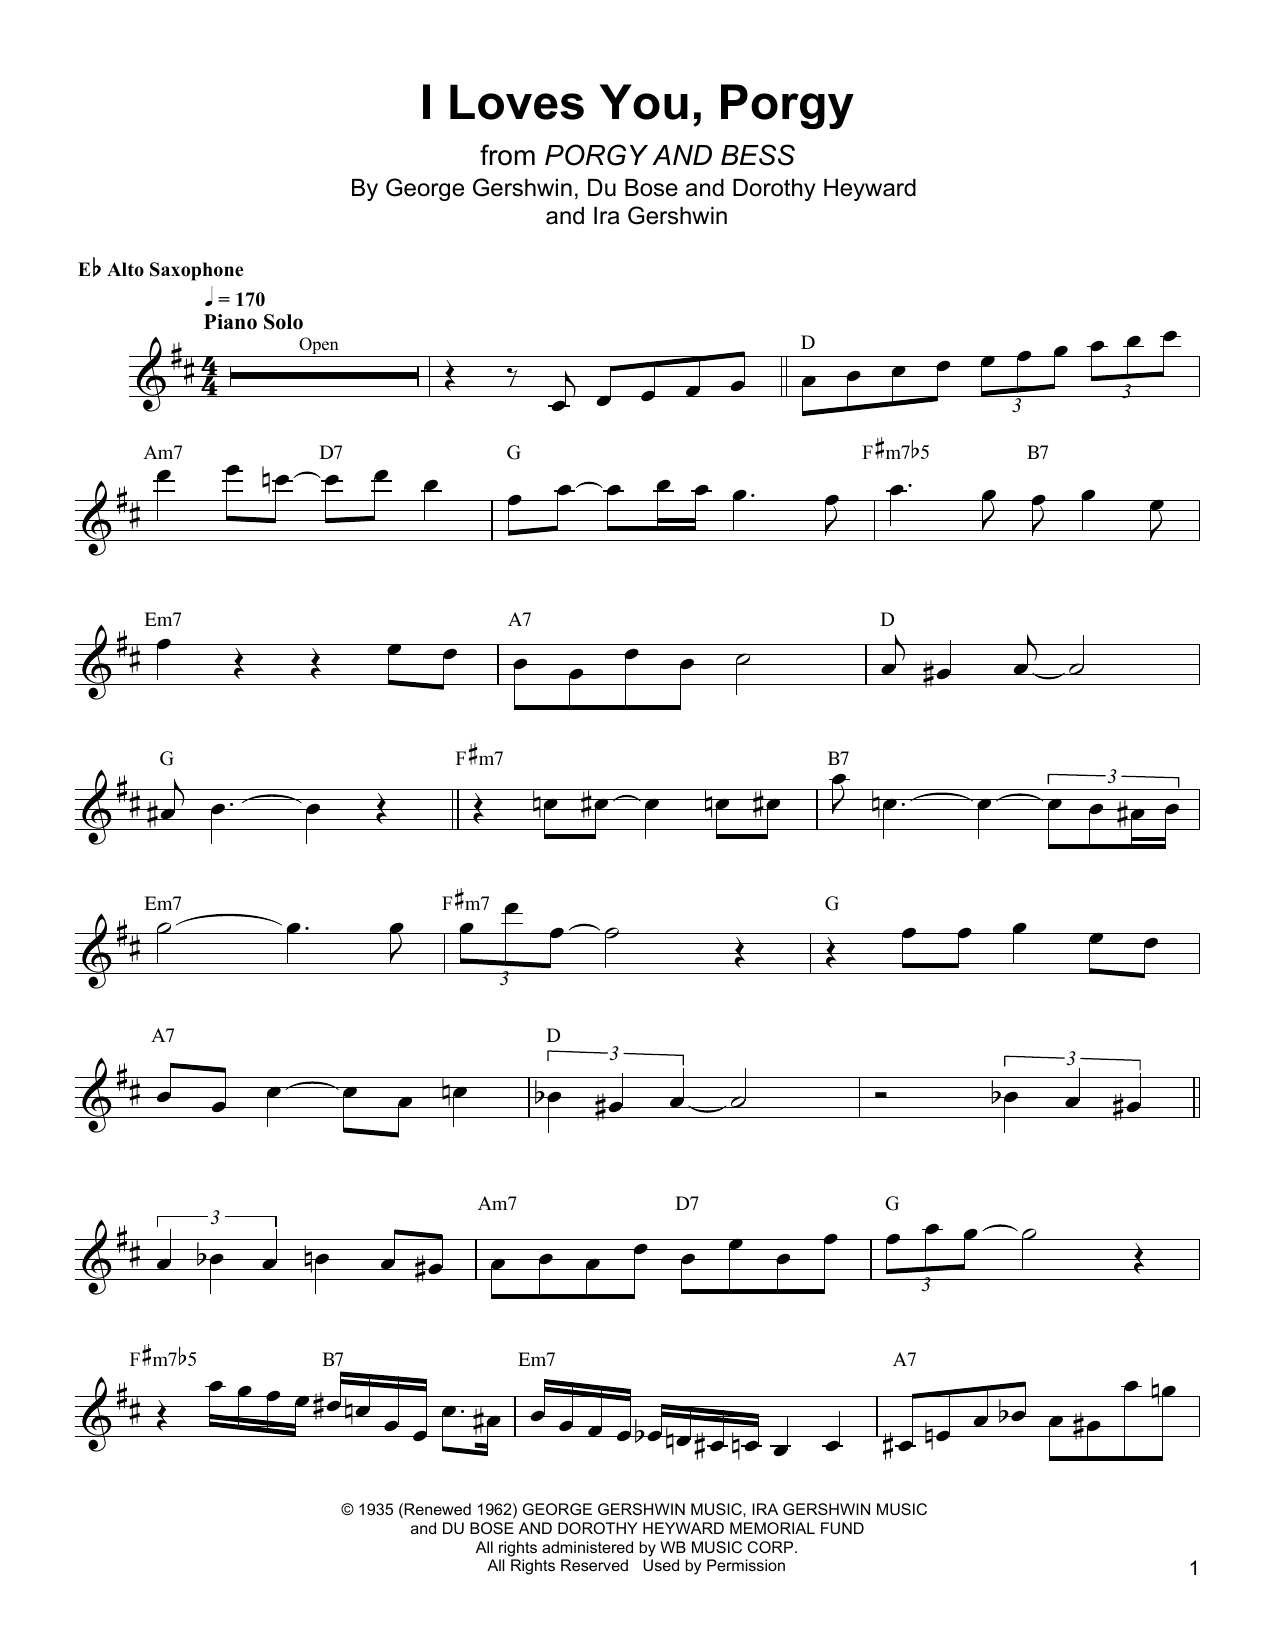 Bud Shank I Loves You, Porgy Sheet Music Notes & Chords for Alto Sax Transcription - Download or Print PDF